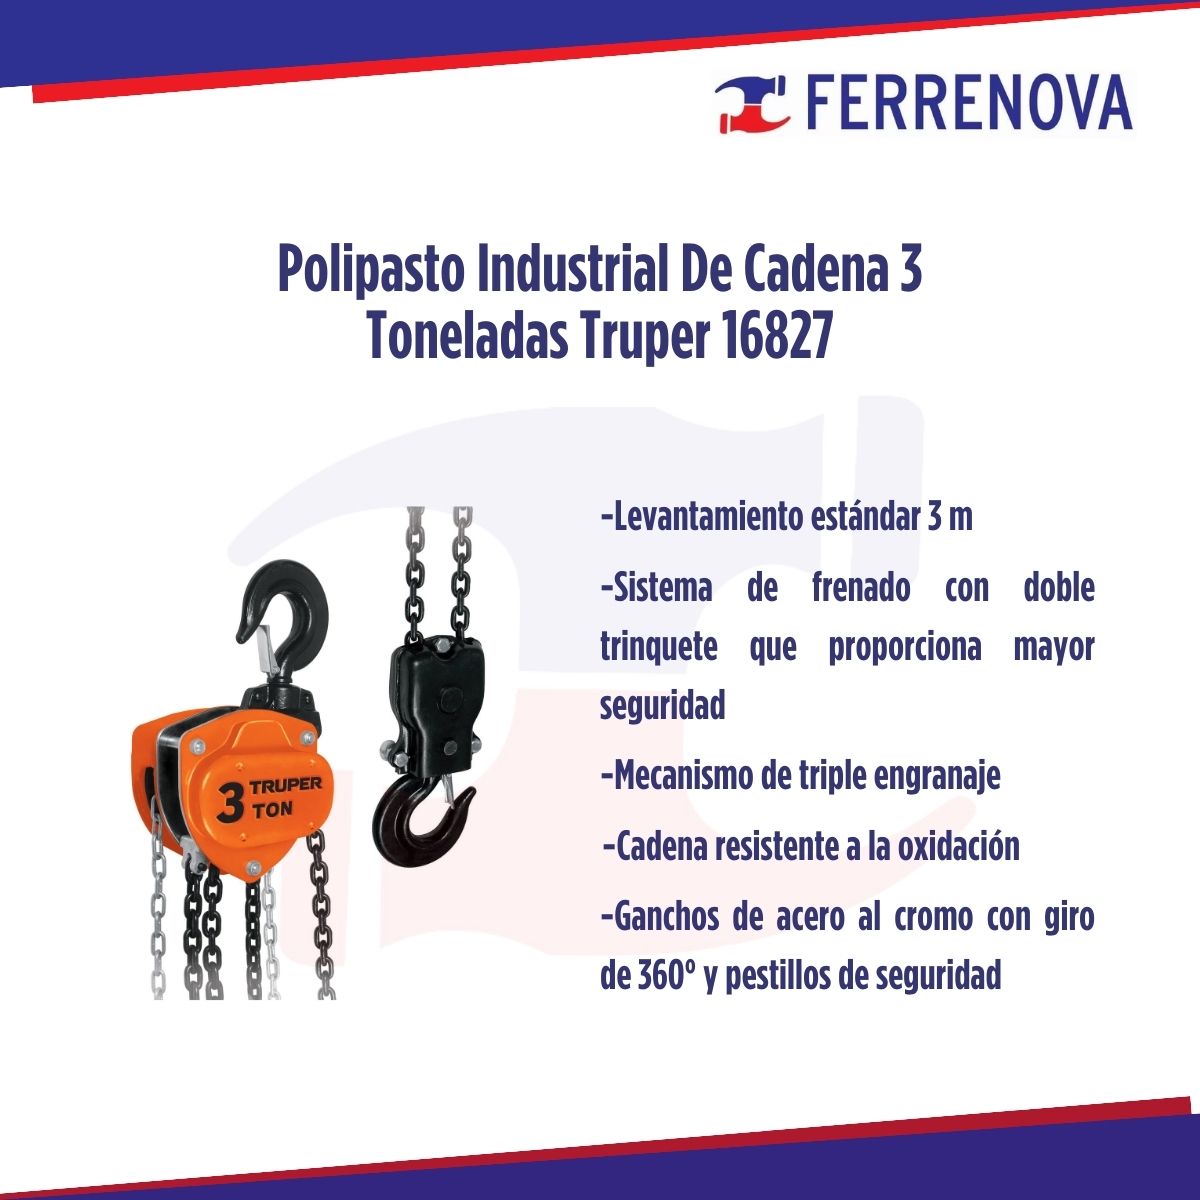 Polipasto Industrial De Cadena 3 Toneladas Truper 16827